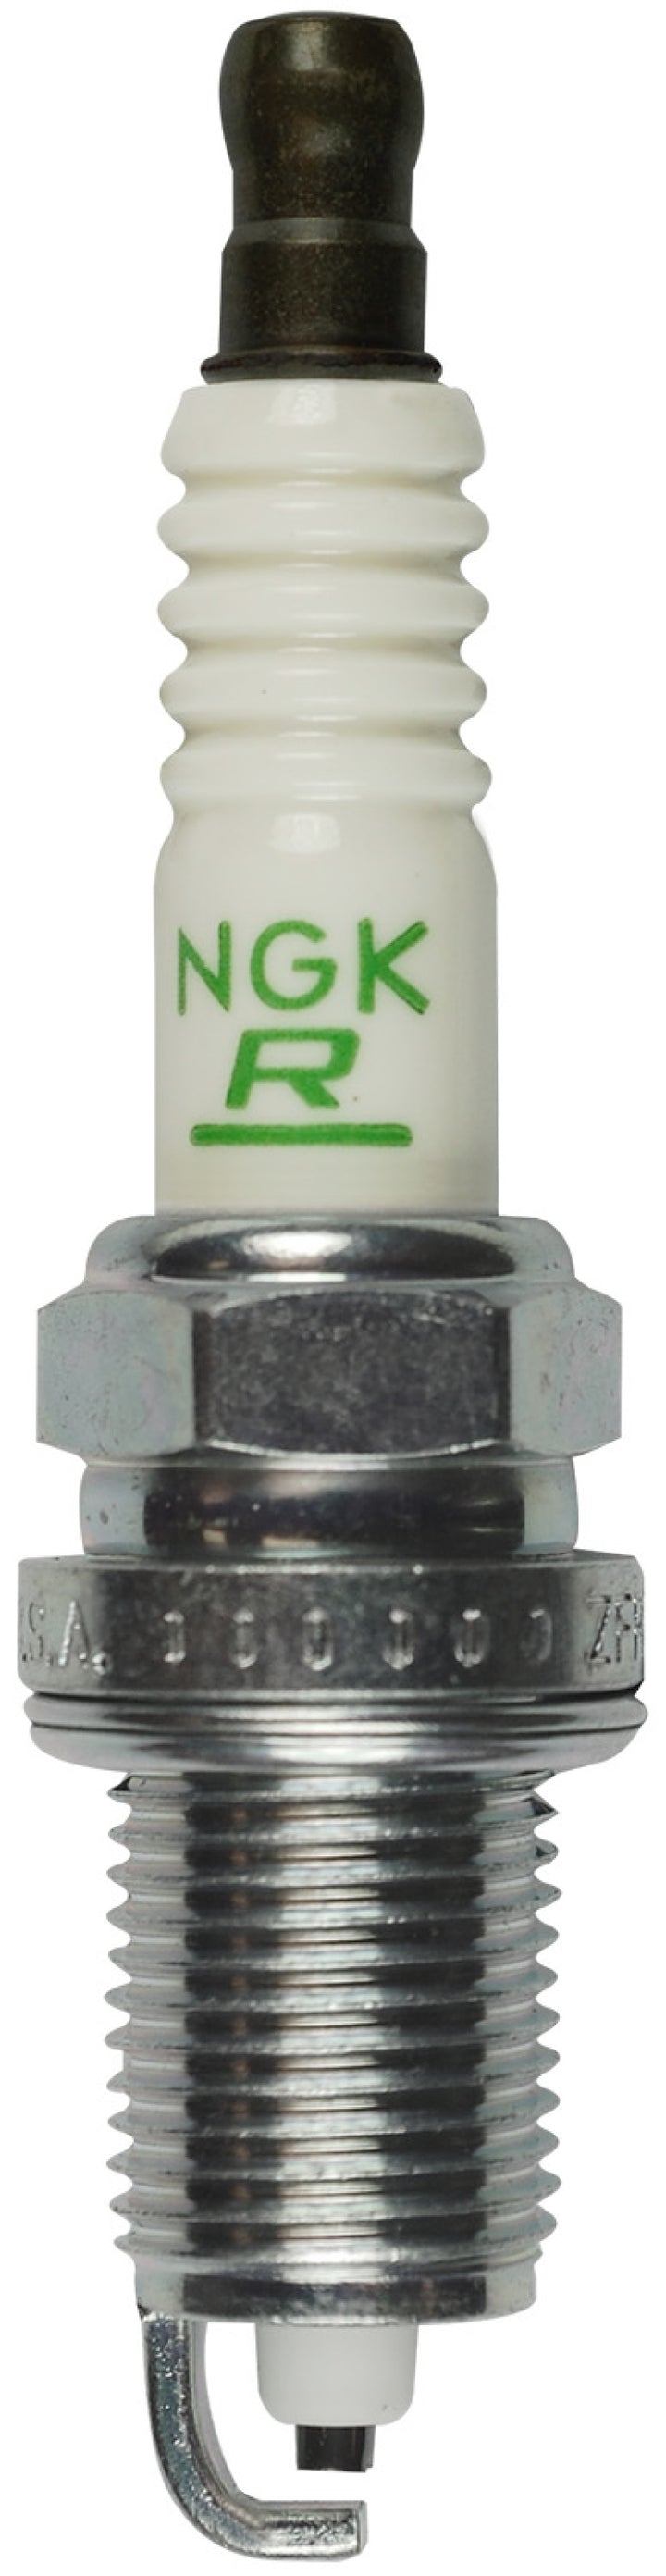 NGK Nickel Spark Plug Box of 4 (ZFR5F-11).